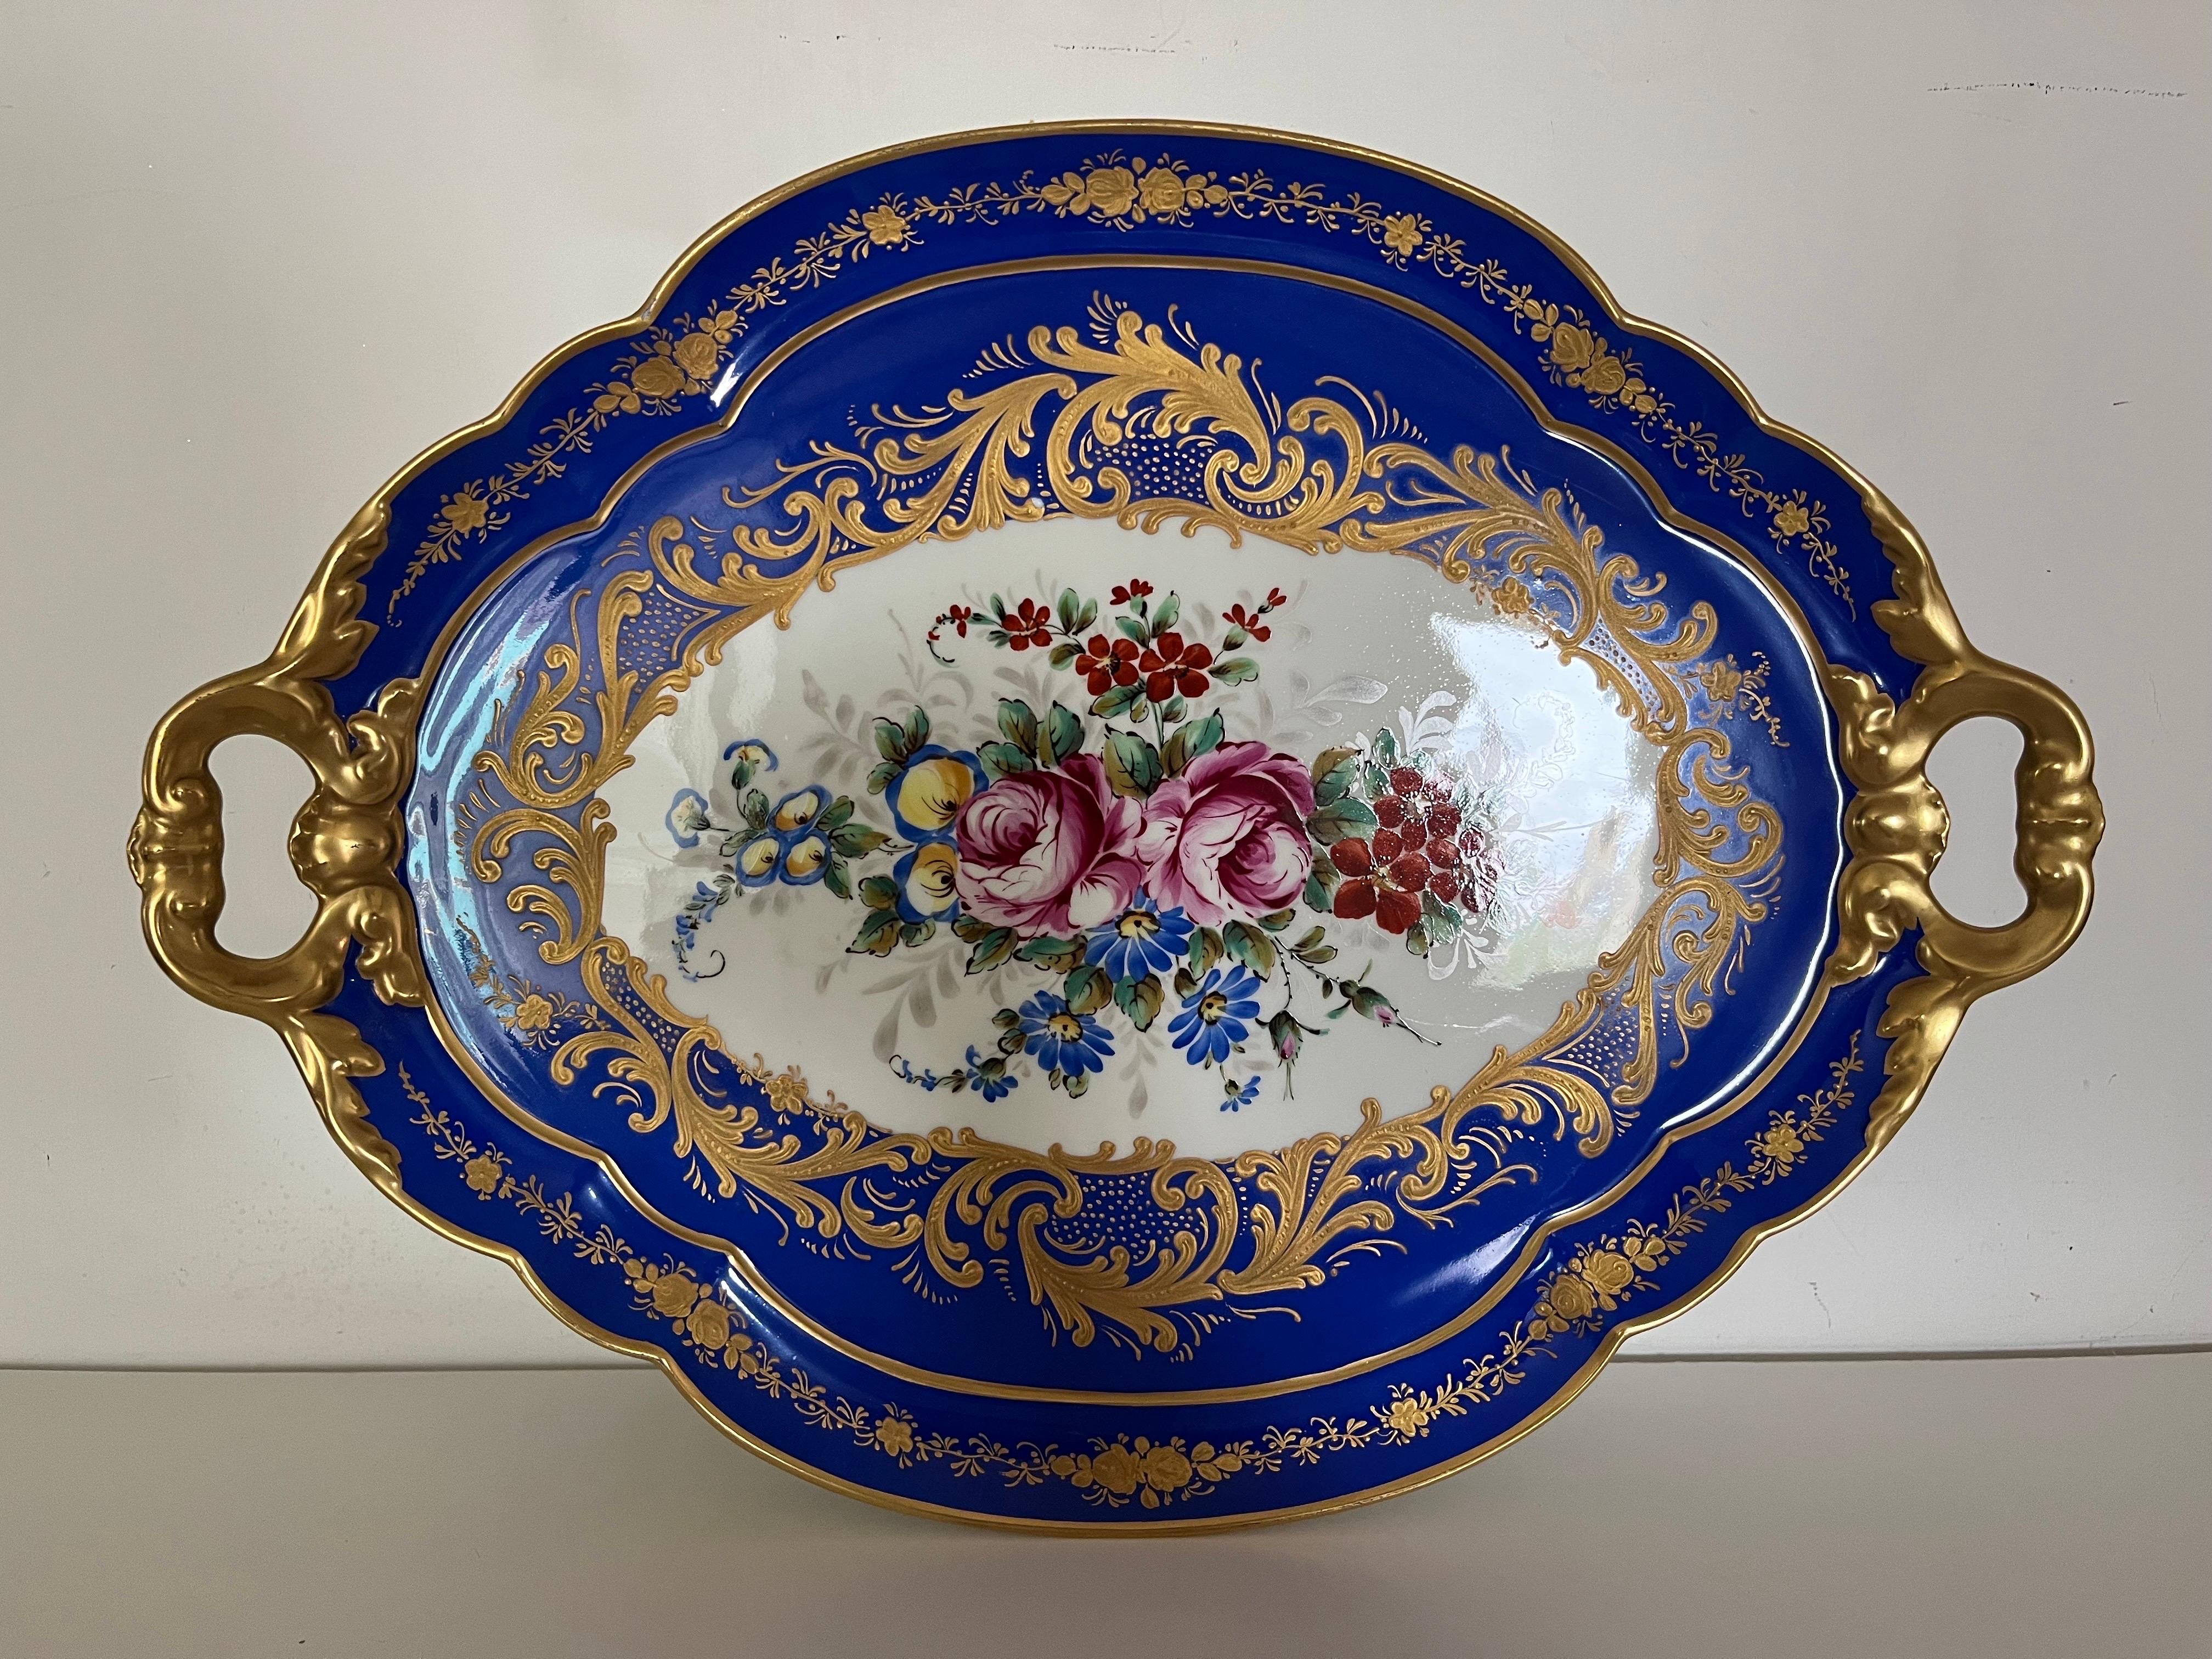 Vassoio Blu Limoges France Decorato a mano del '900 -Antiques- For Sale 7